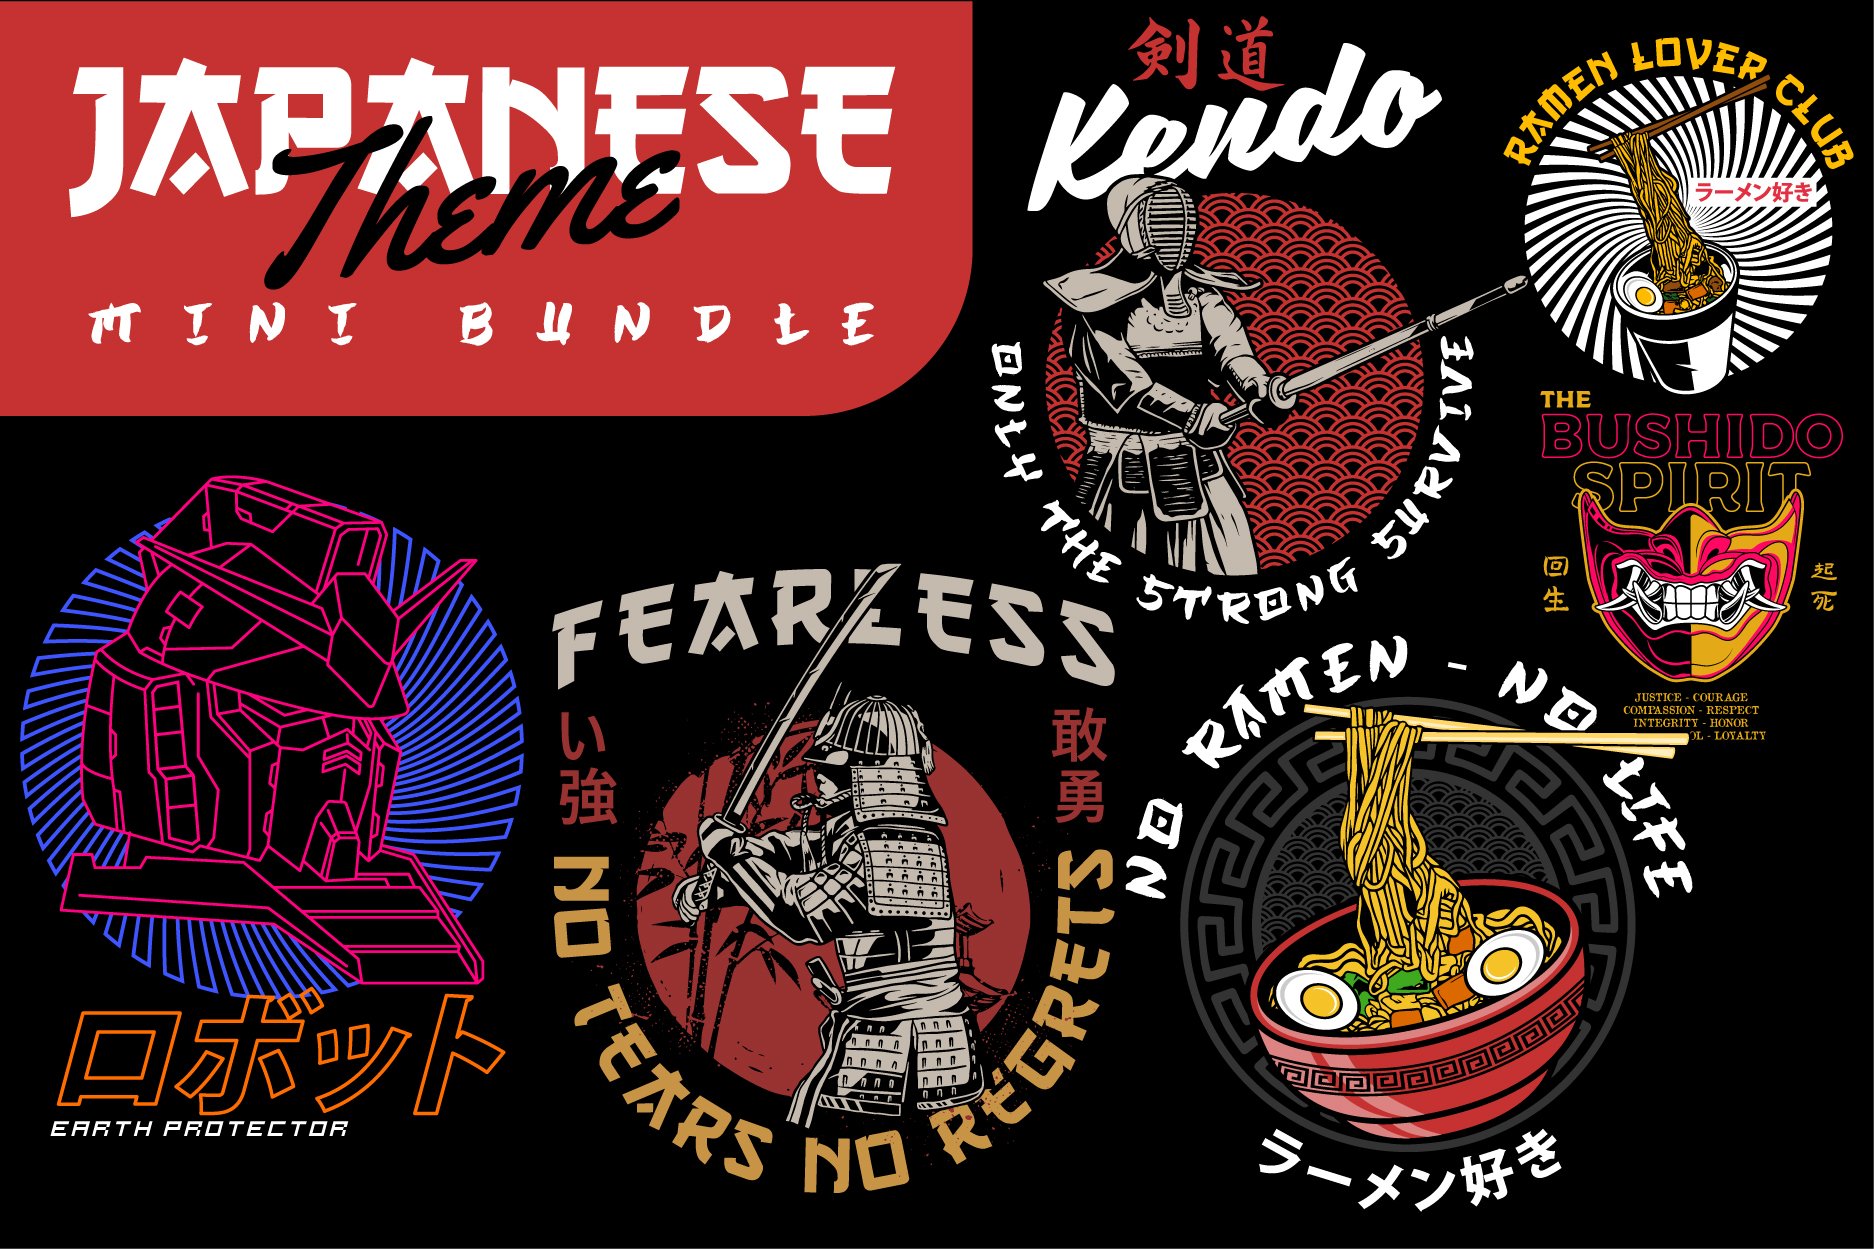 Japanese theme mini bundle cover image.